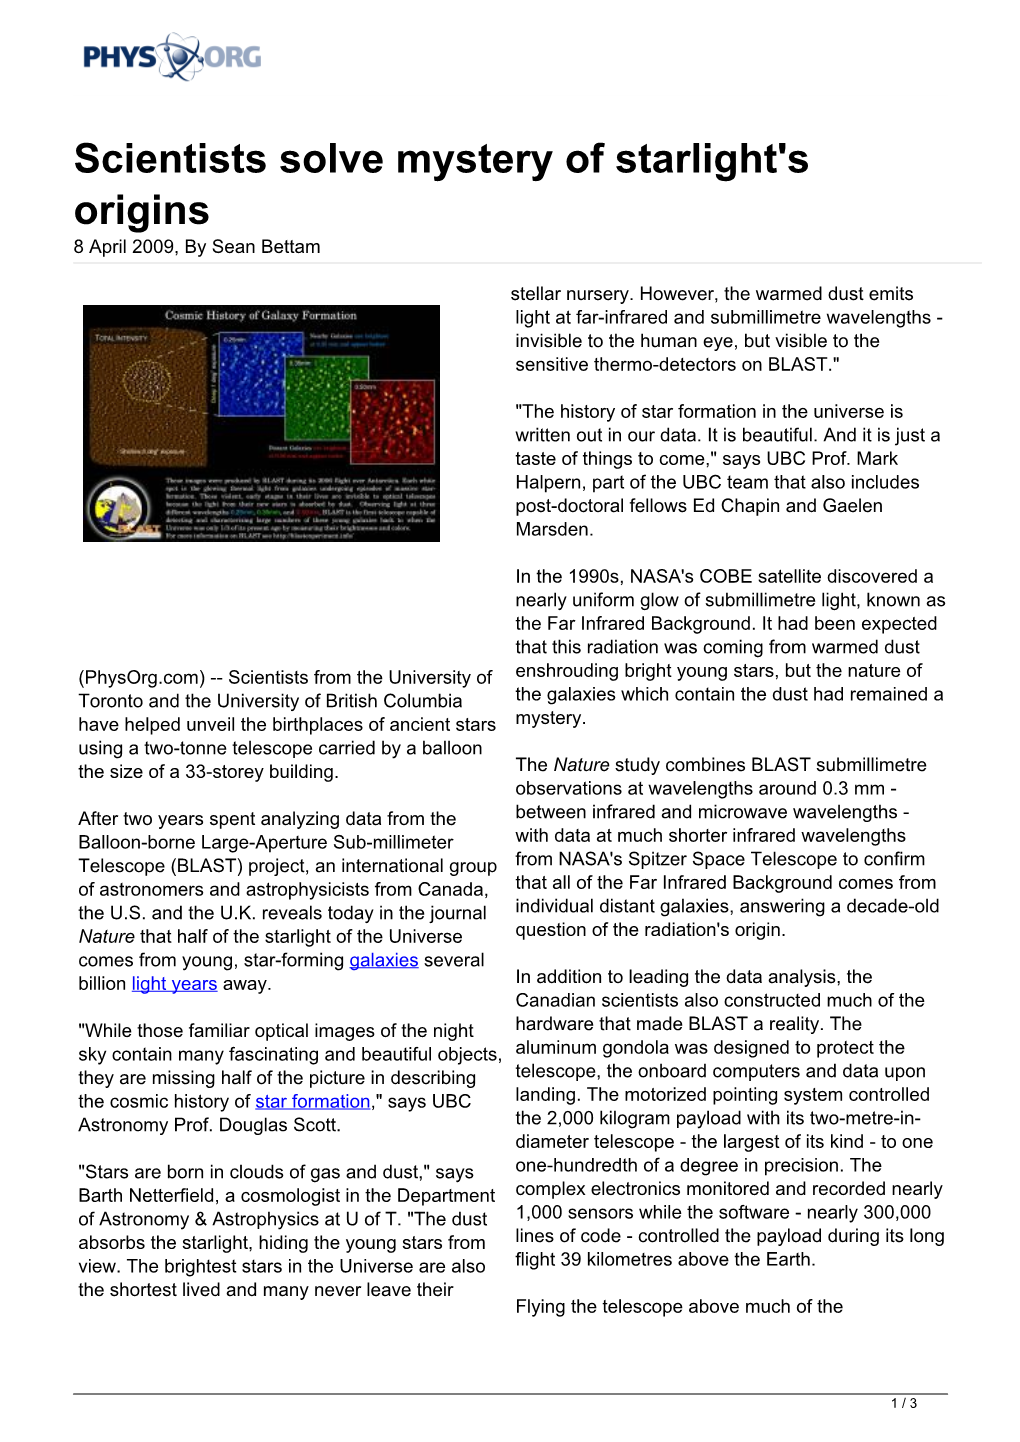 Scientists Solve Mystery of Starlight's Origins 8 April 2009, by Sean Bettam